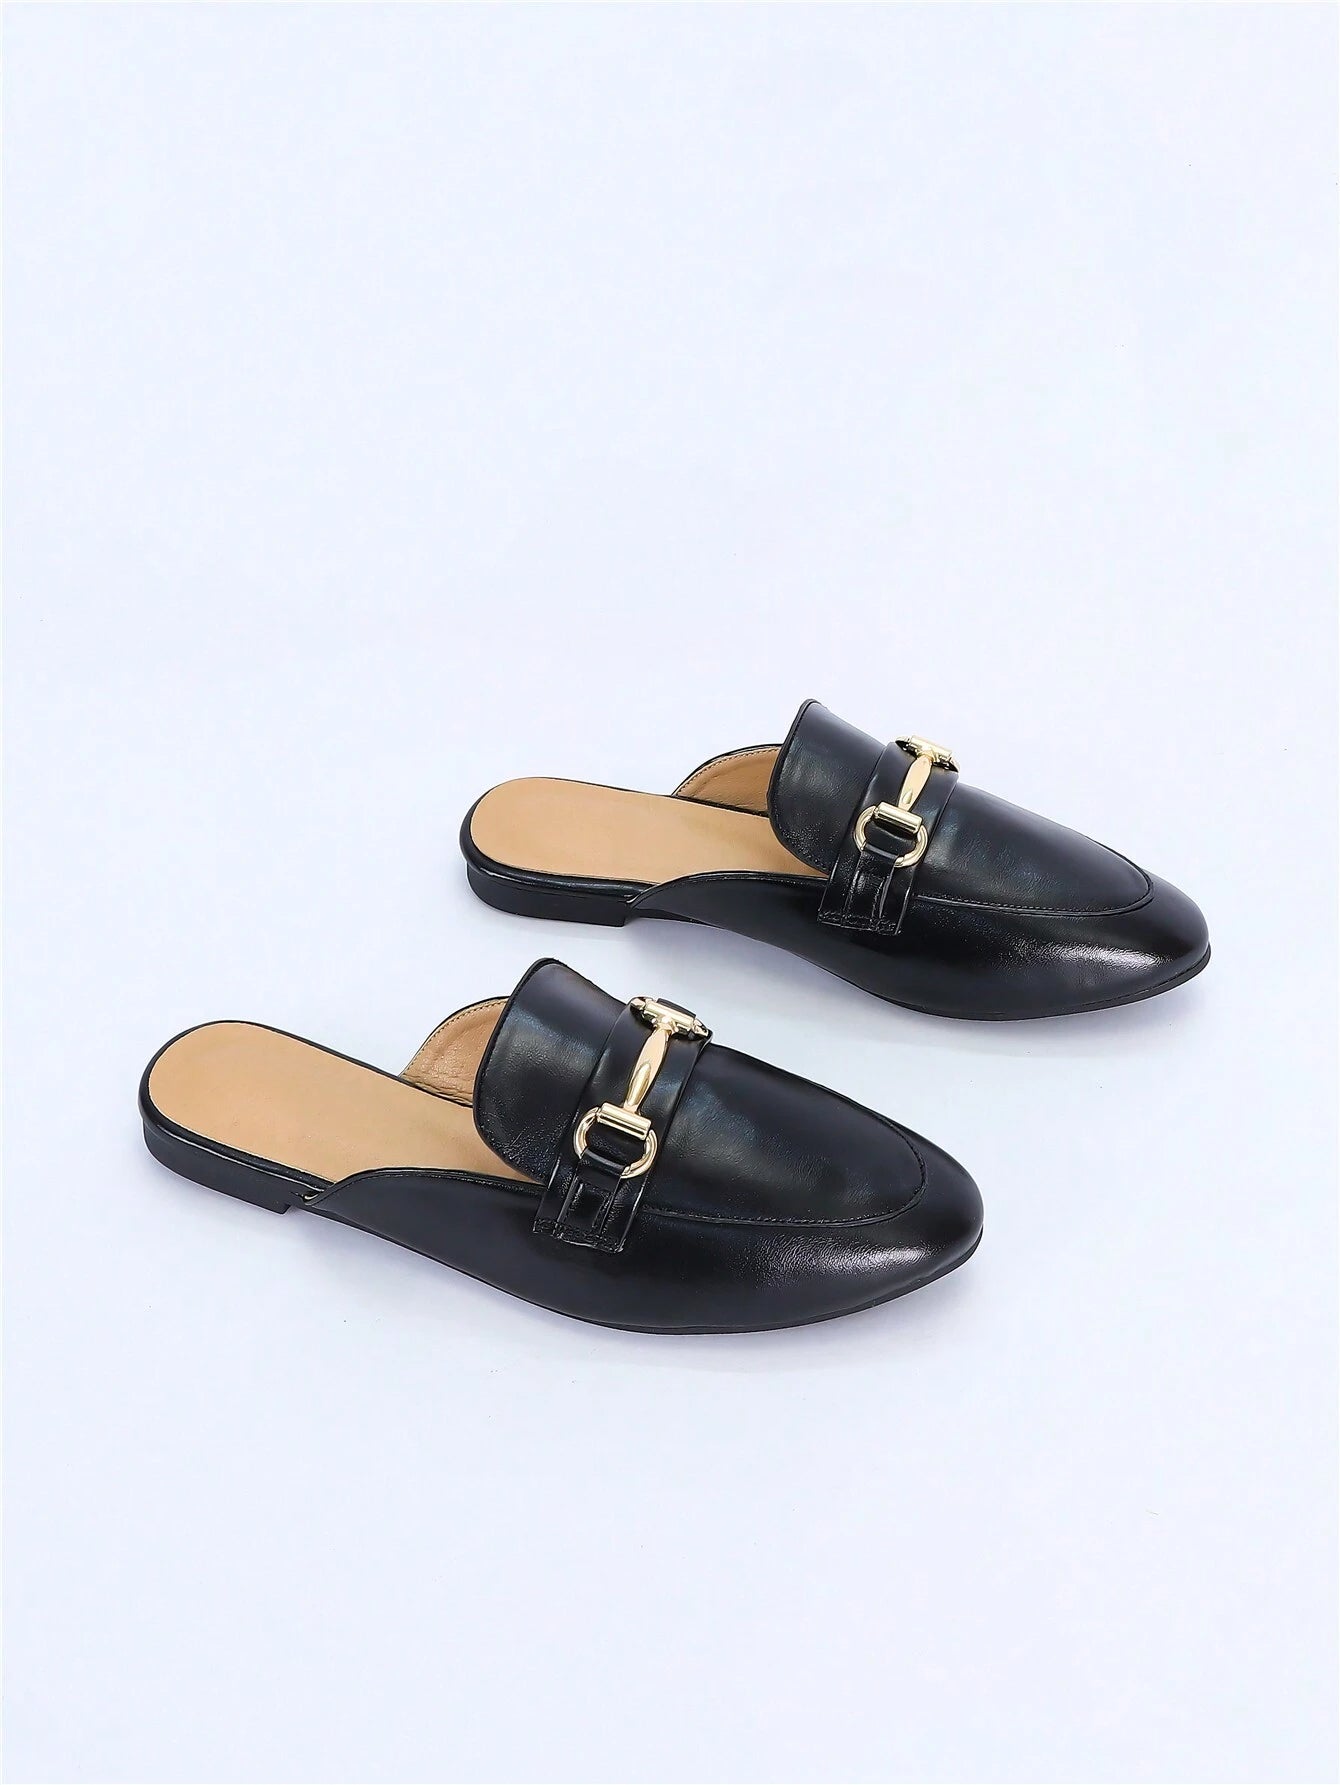 Horsebit Decor Loafer Mules Black Flat Shoes For Women